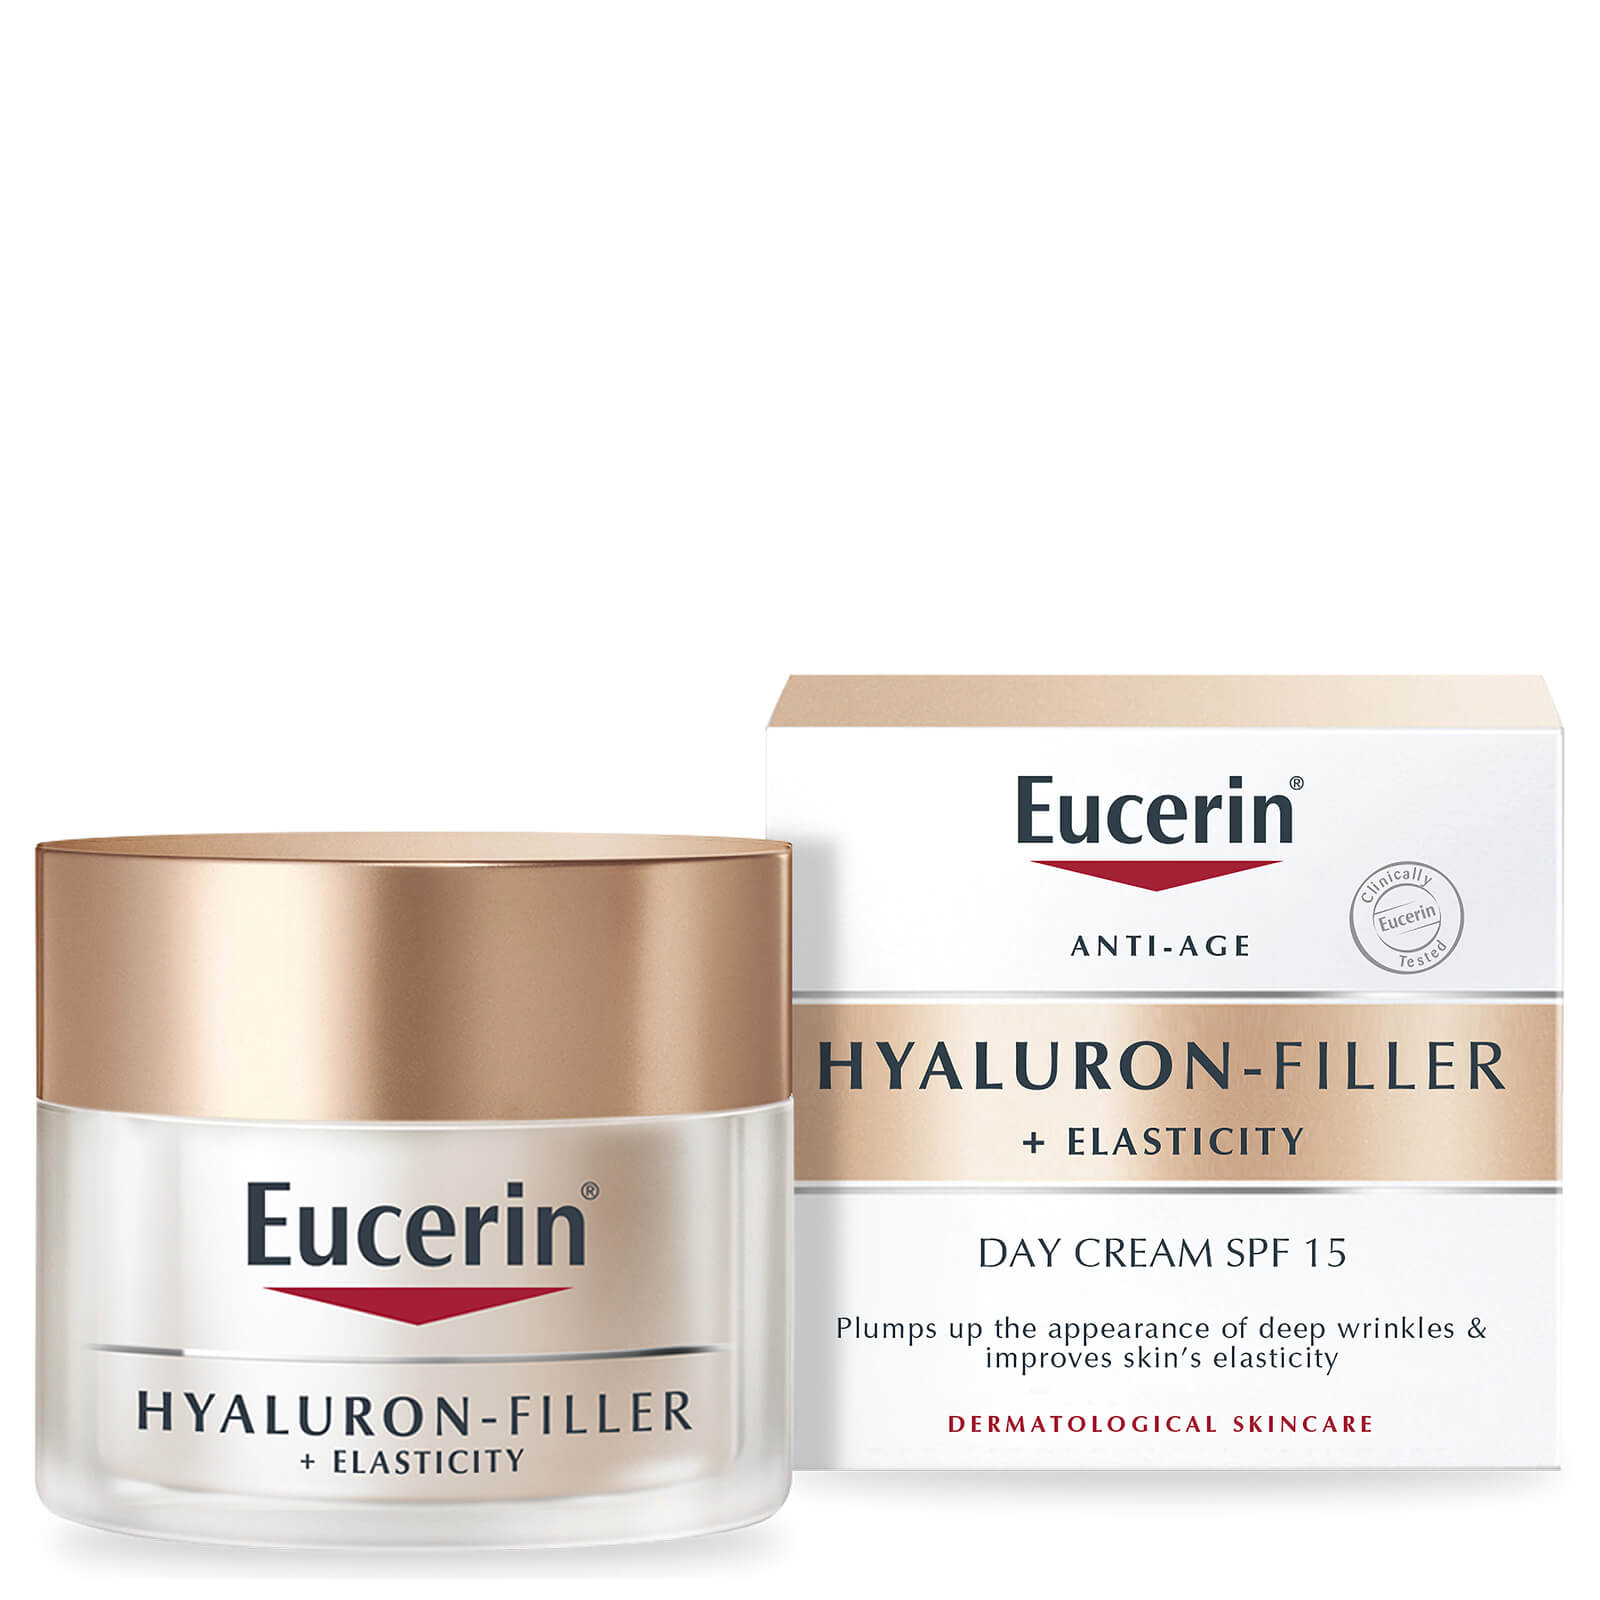 Eucerin Hyaluron-Filler + Elasticity Day Cream SPF 15 50ml